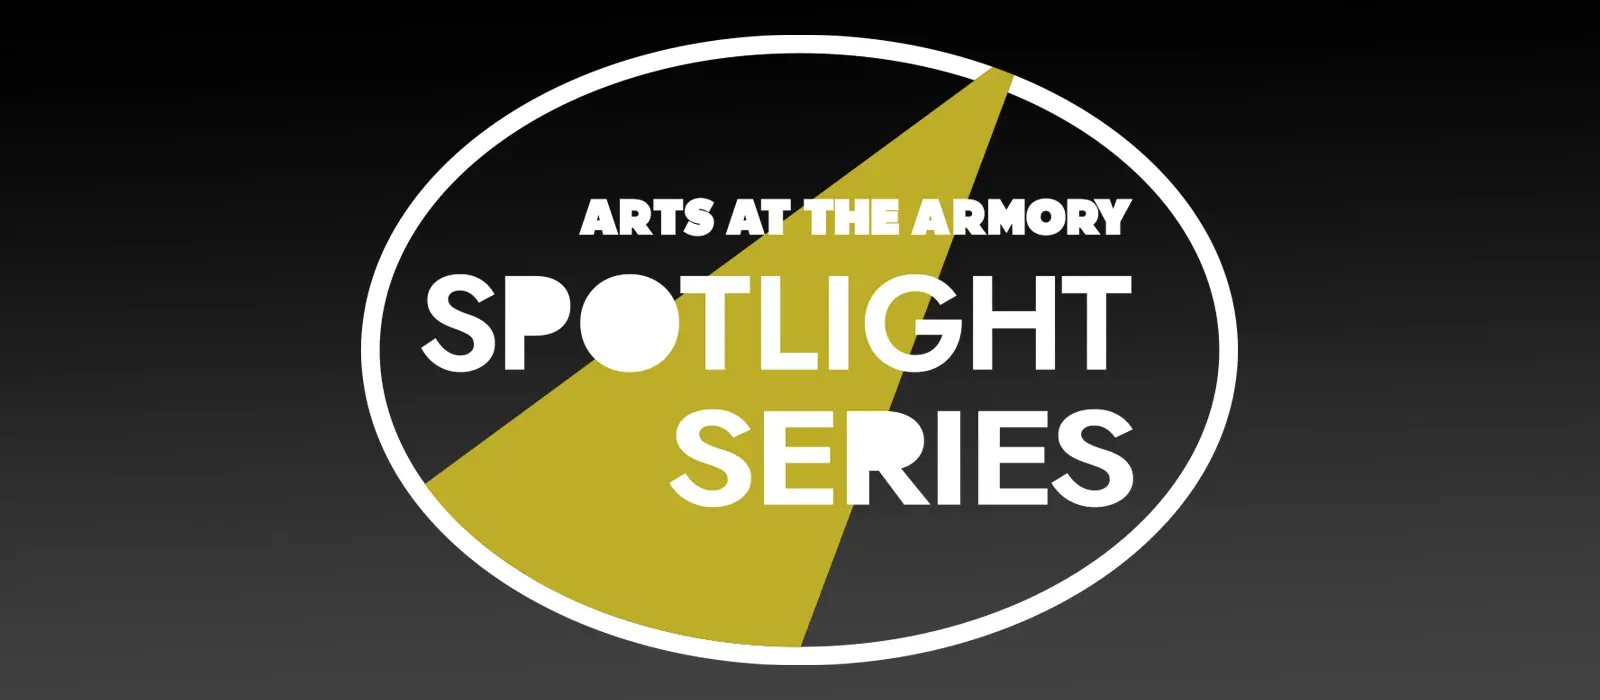 Arts at the Armory Spotlight Series